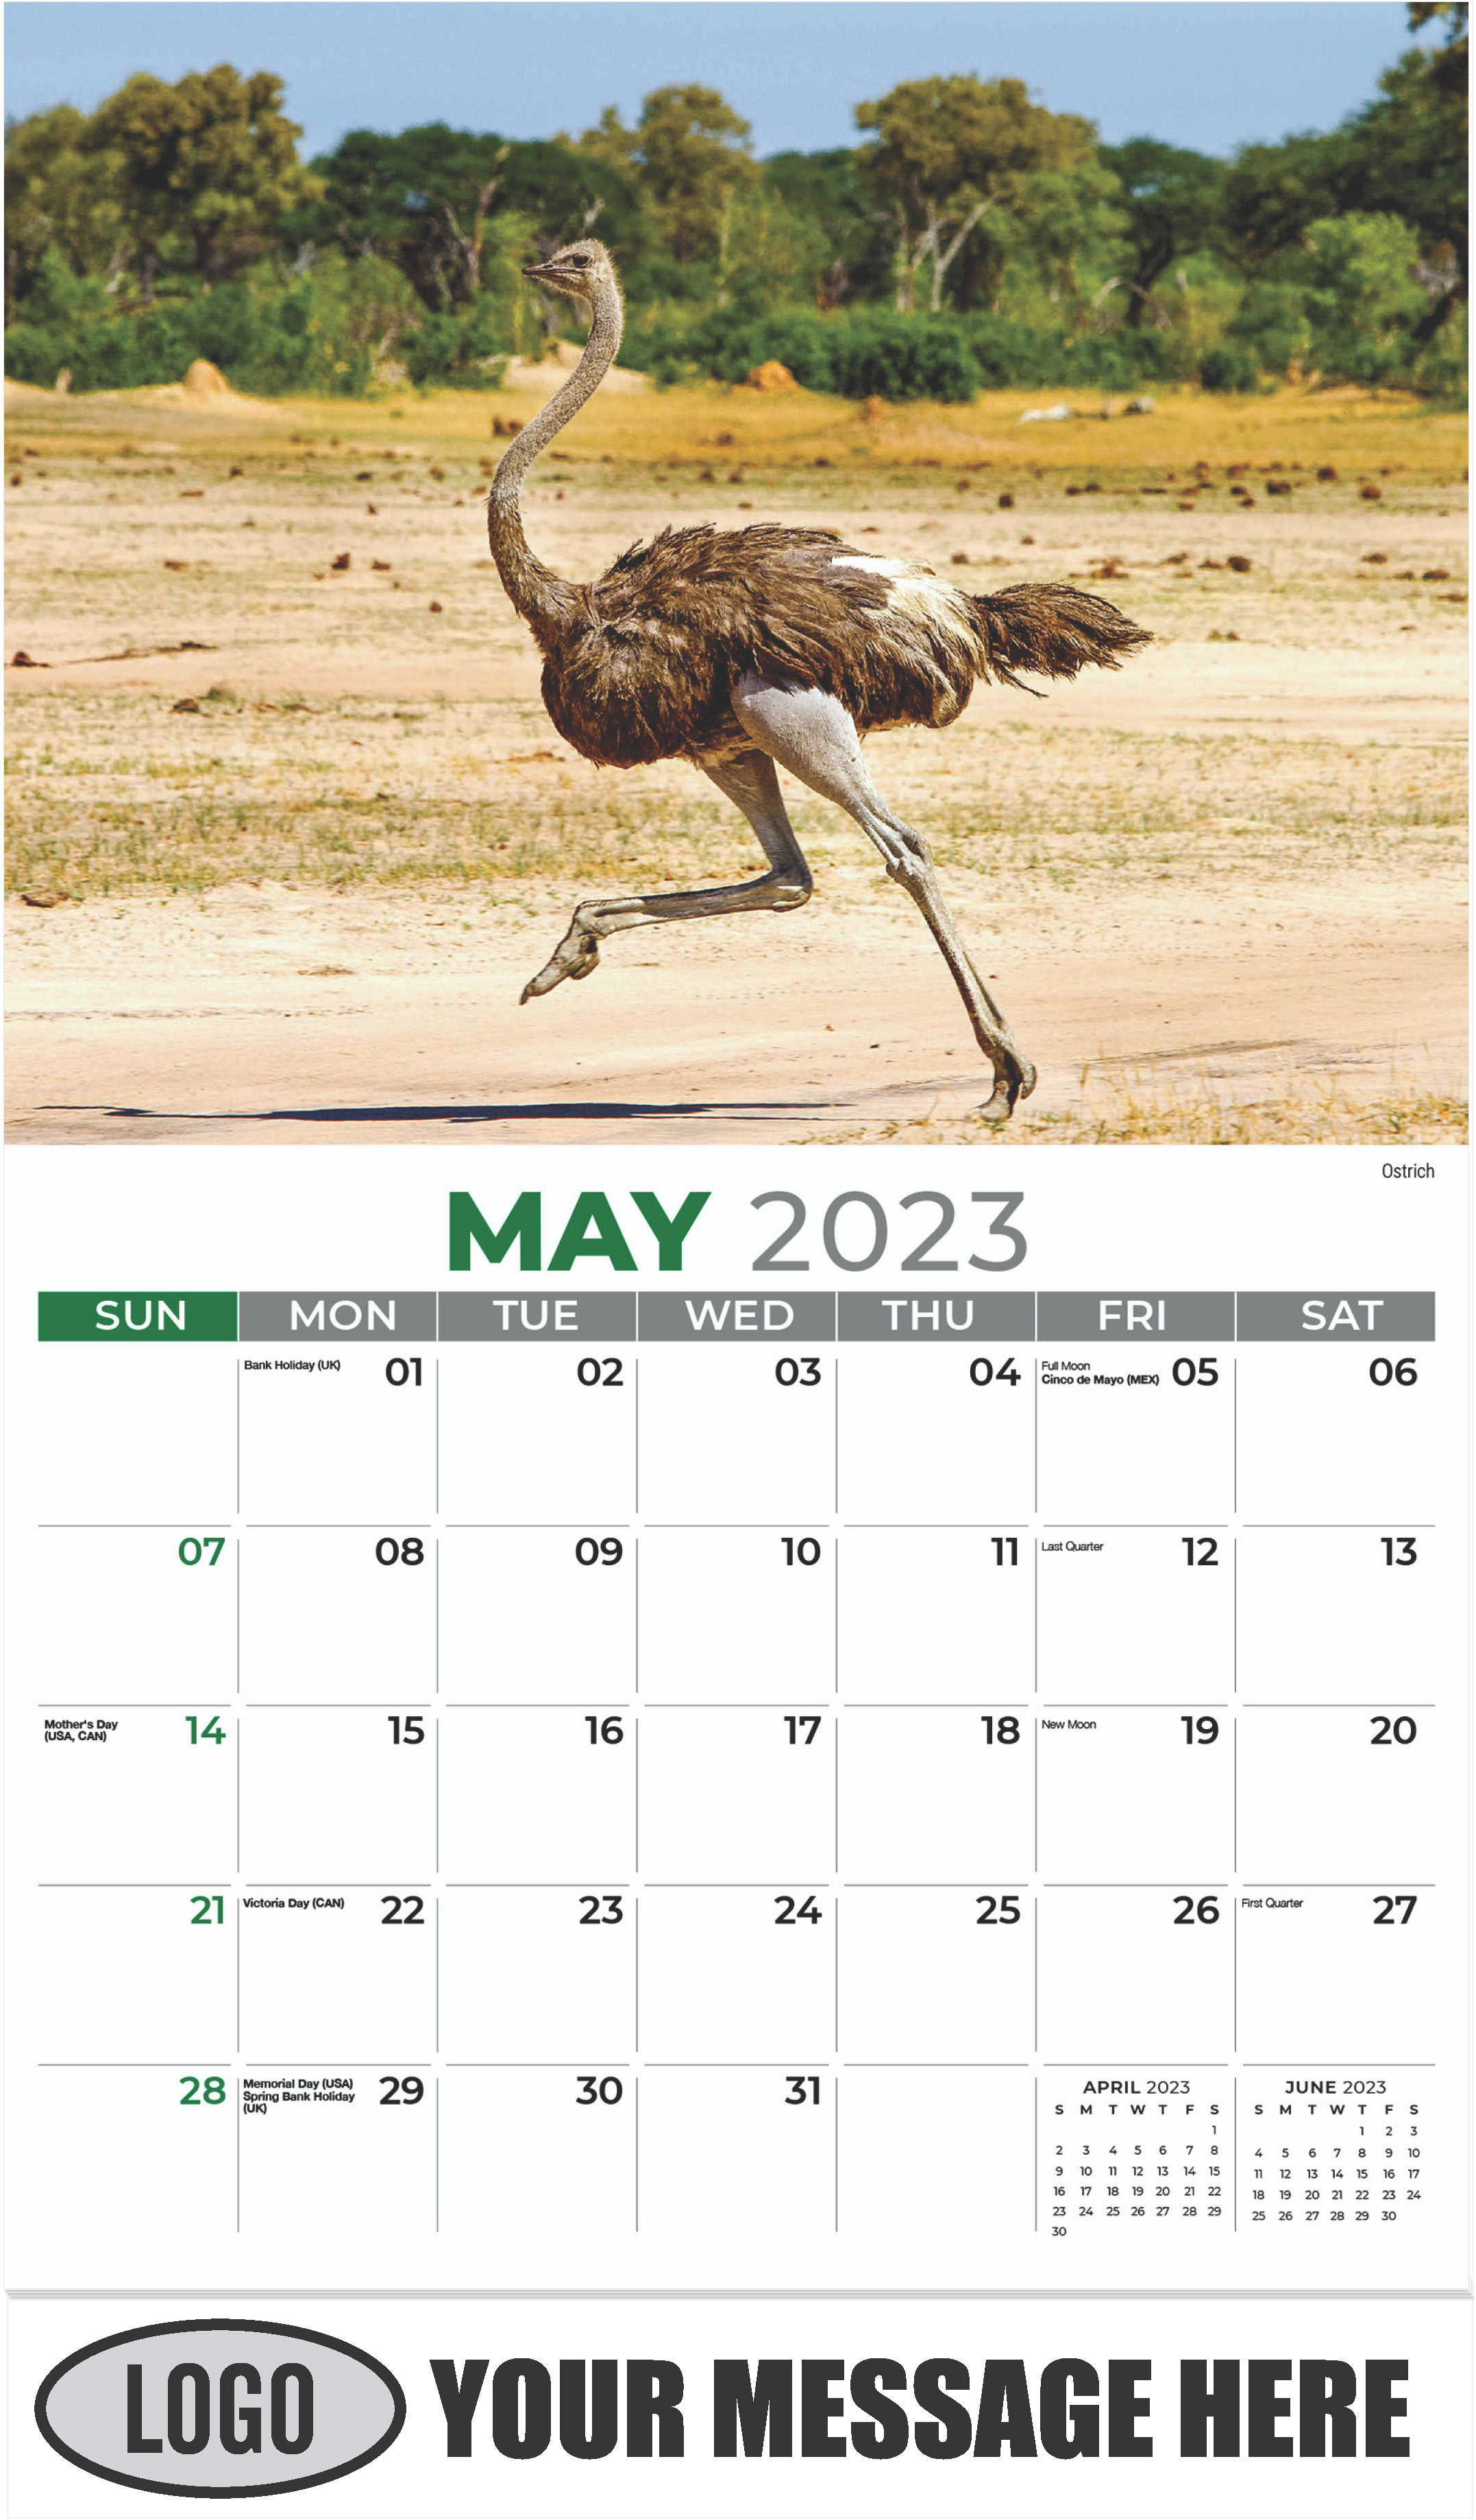 Ostrich - May - International Wildlife 2023 Promotional Calendar